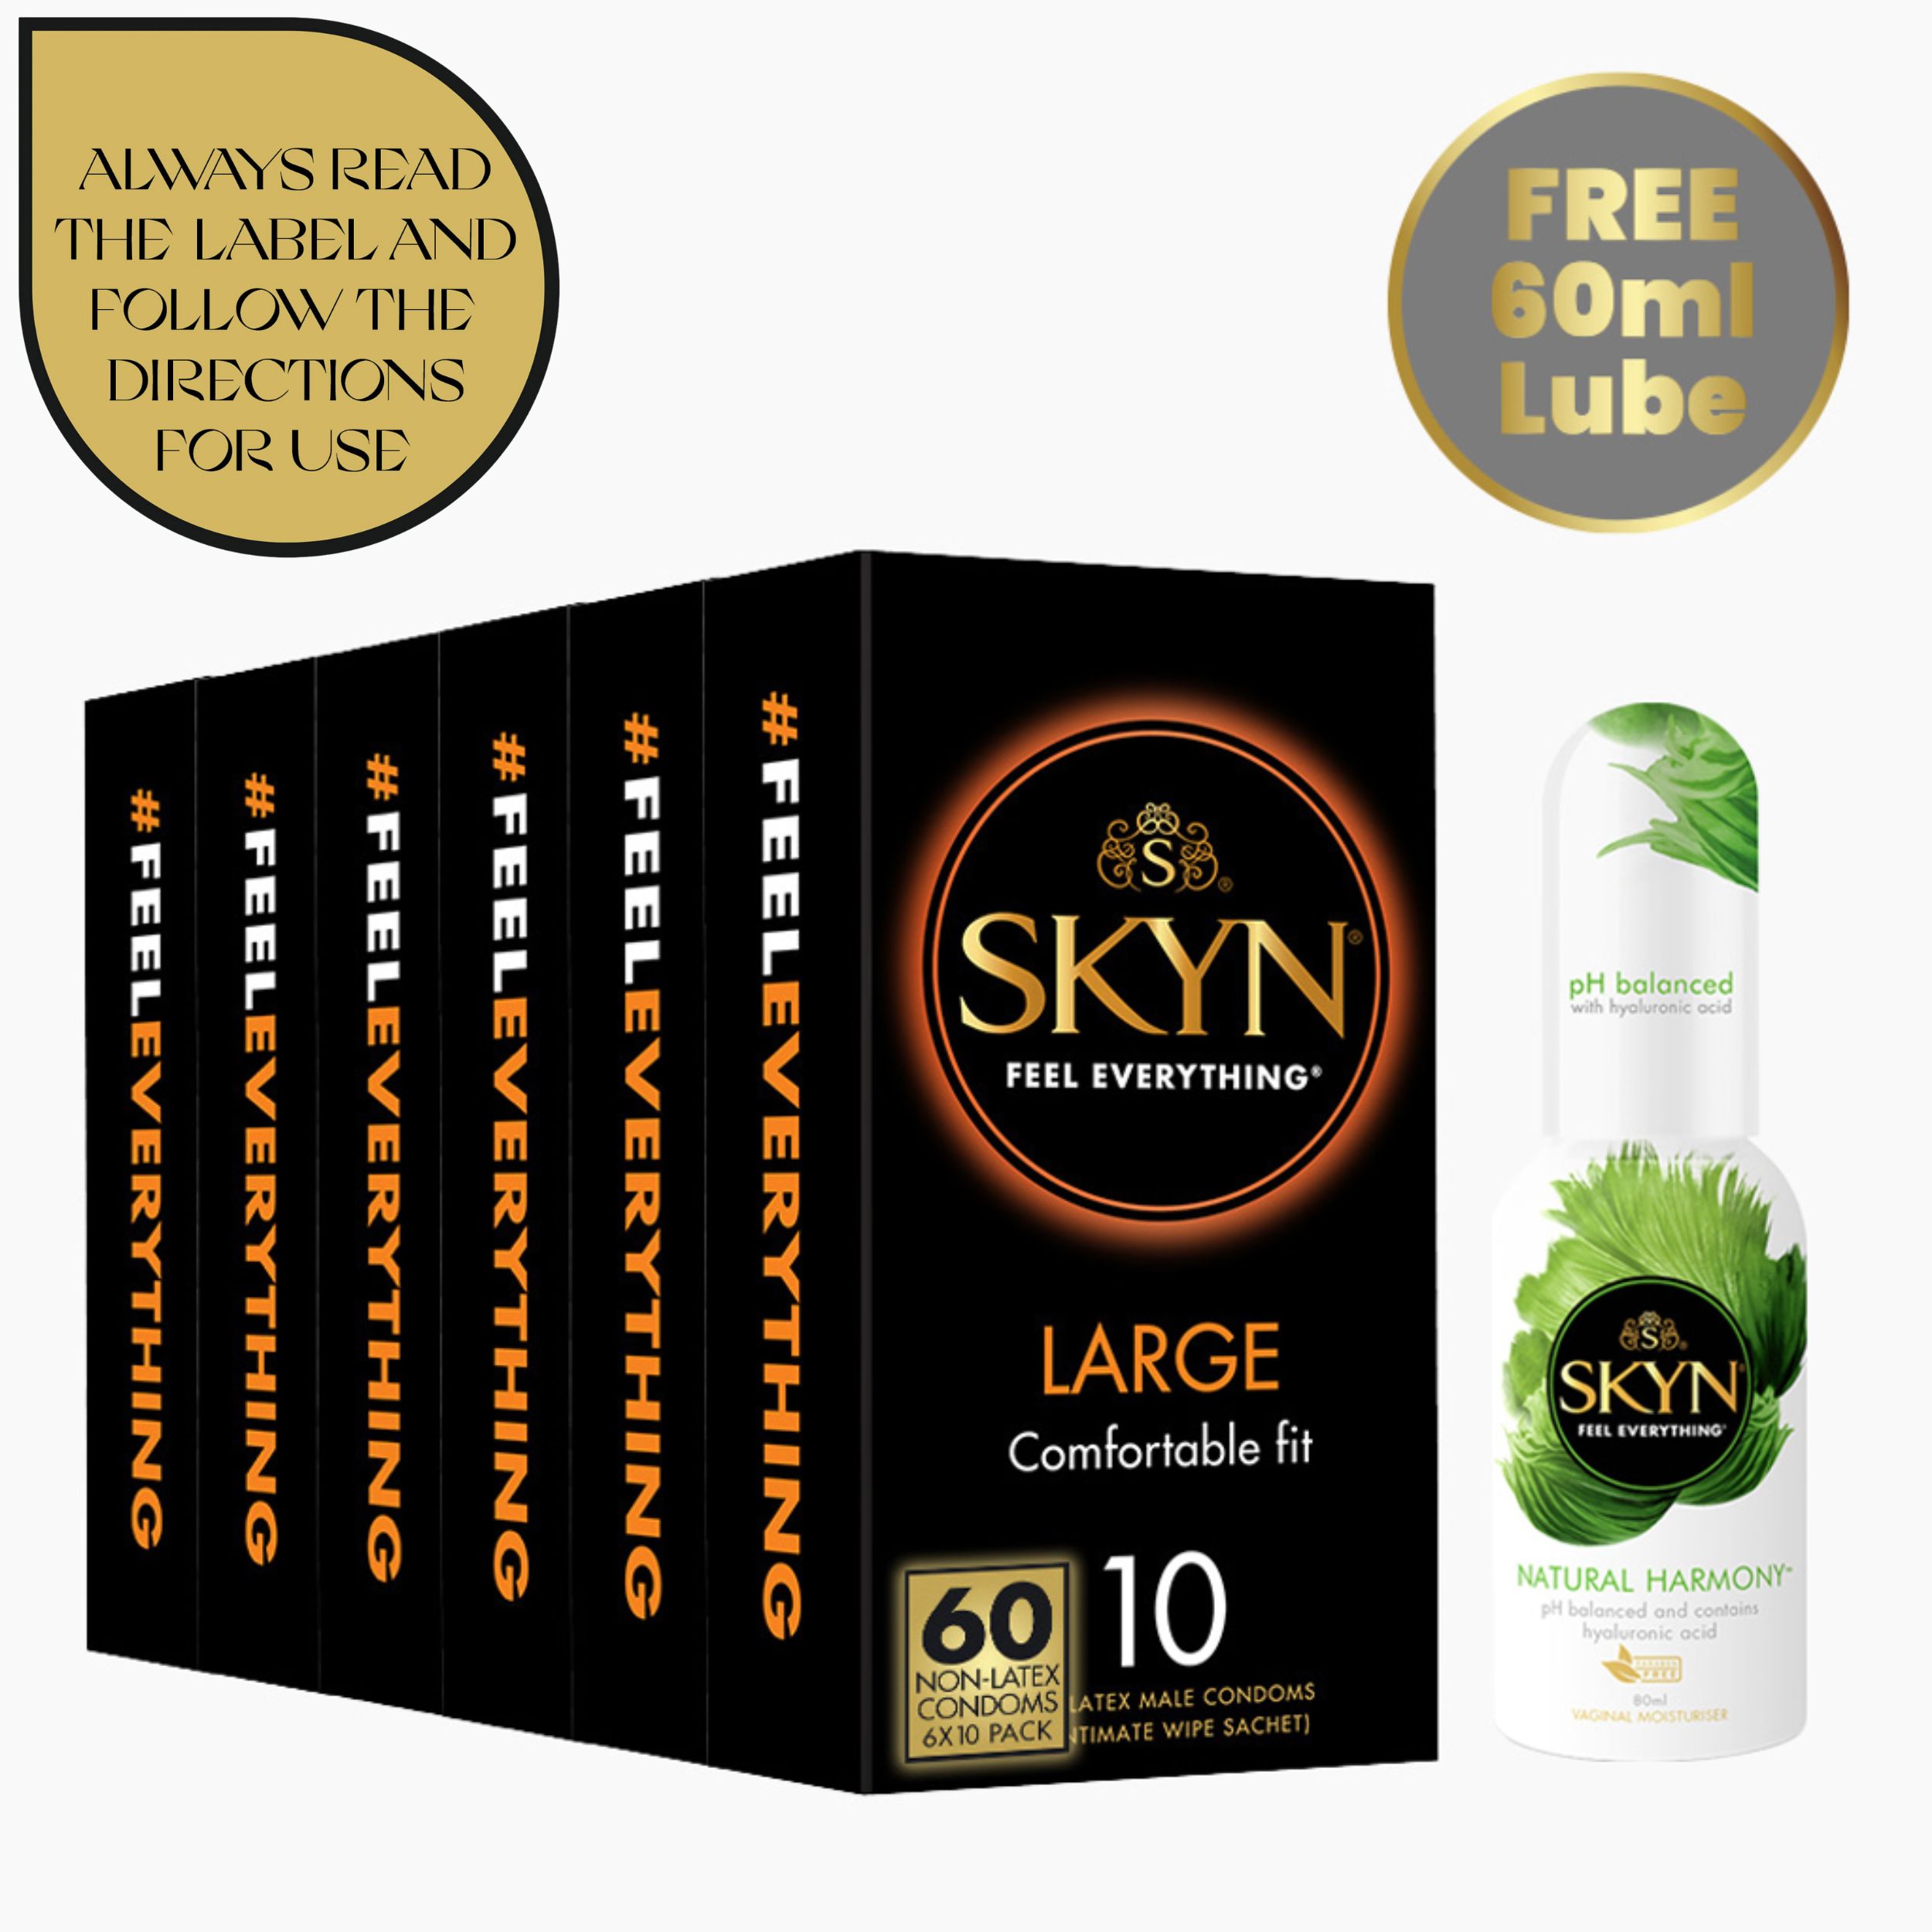 SKYN® Large Condoms 60 + Natural Harmony Gel 80ml